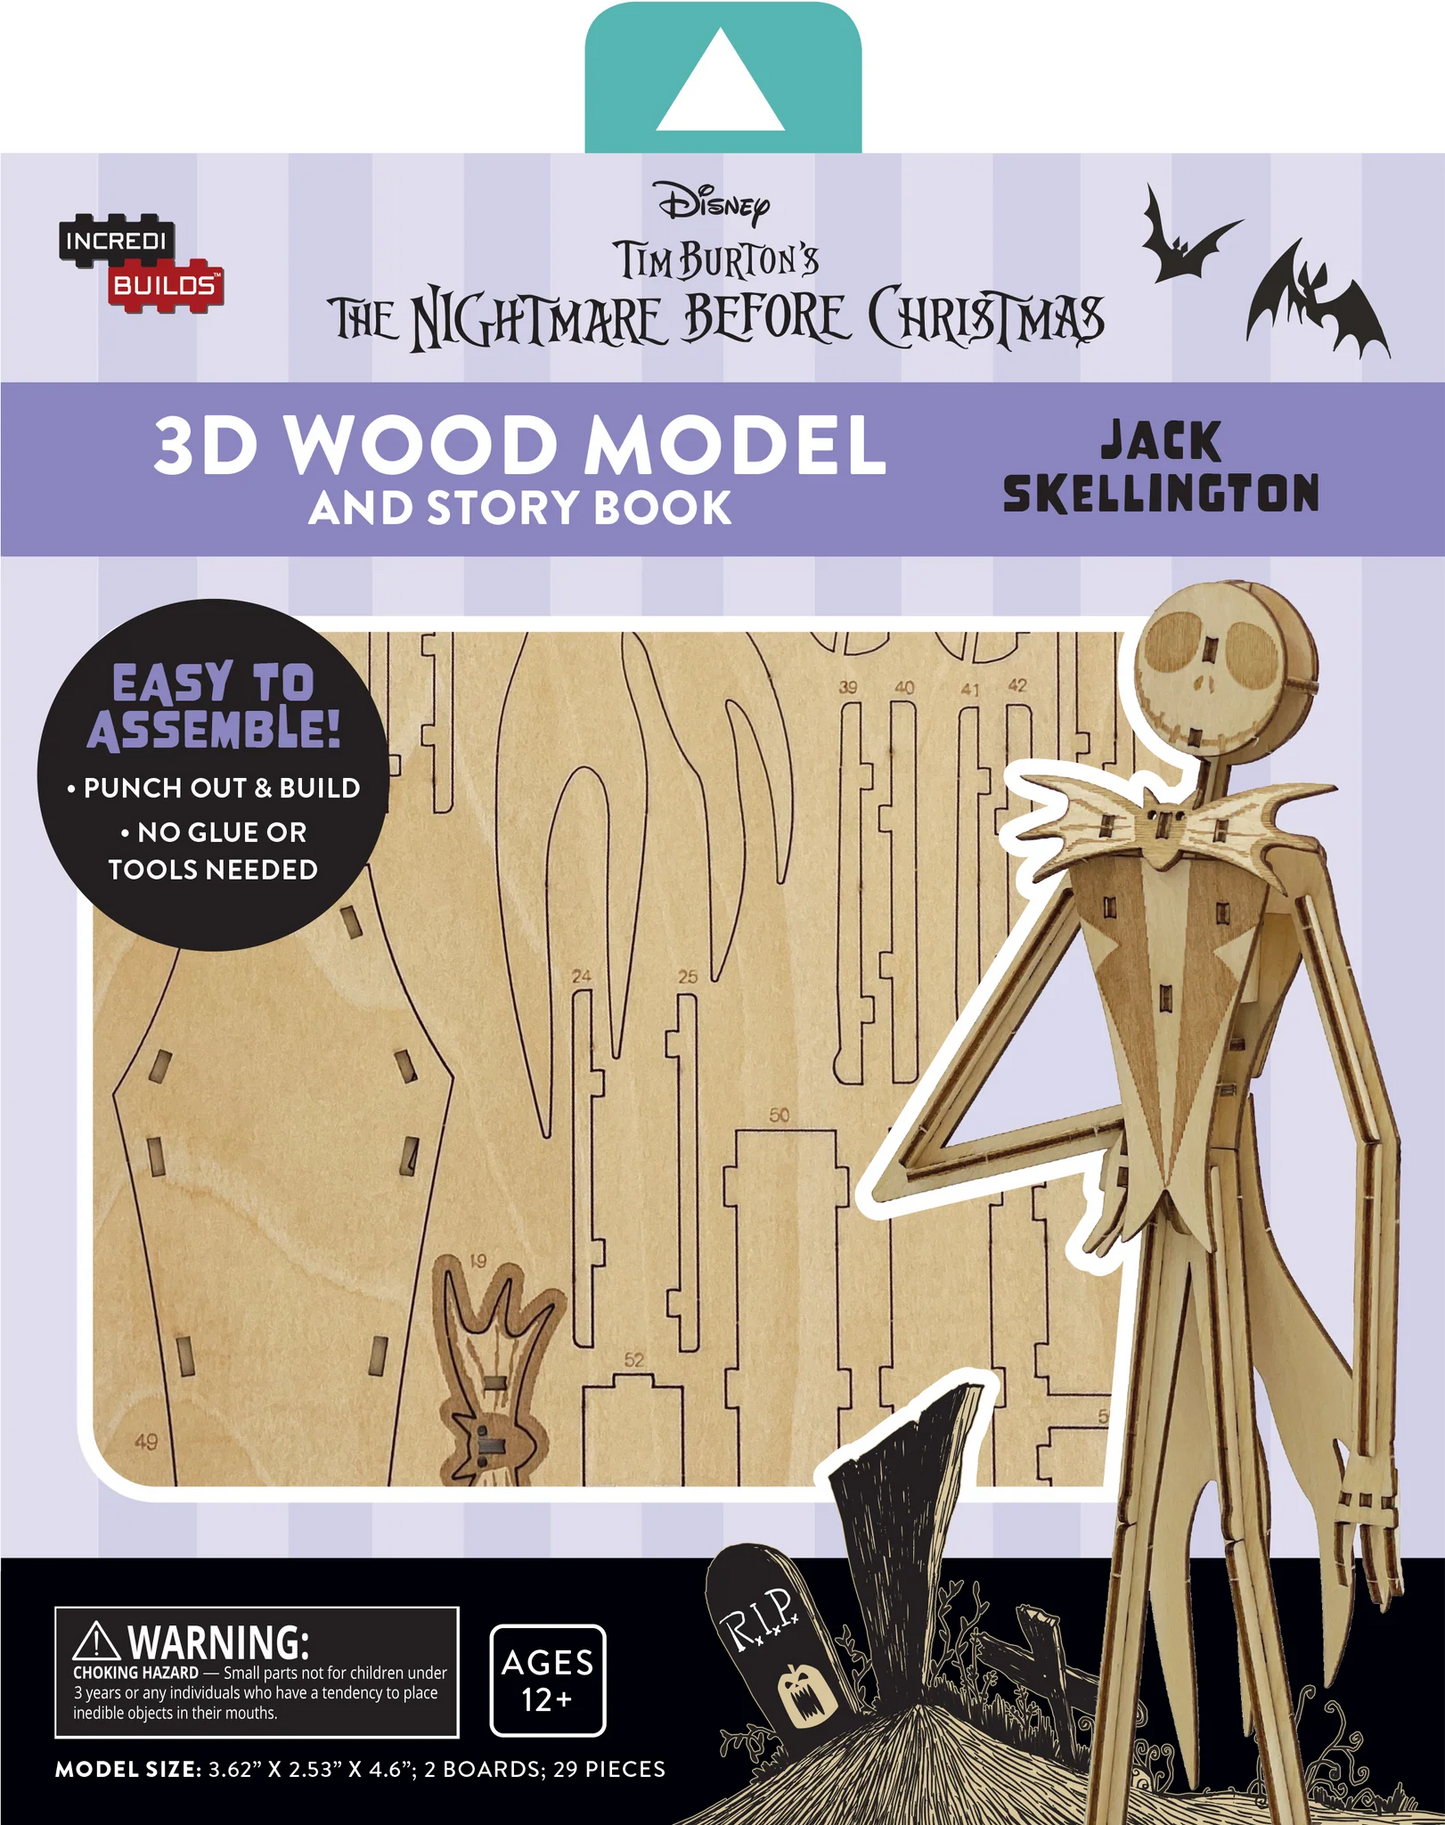 Jack Skellington IncrediBuilds 3D Wood Model Nightmare Before Christmas